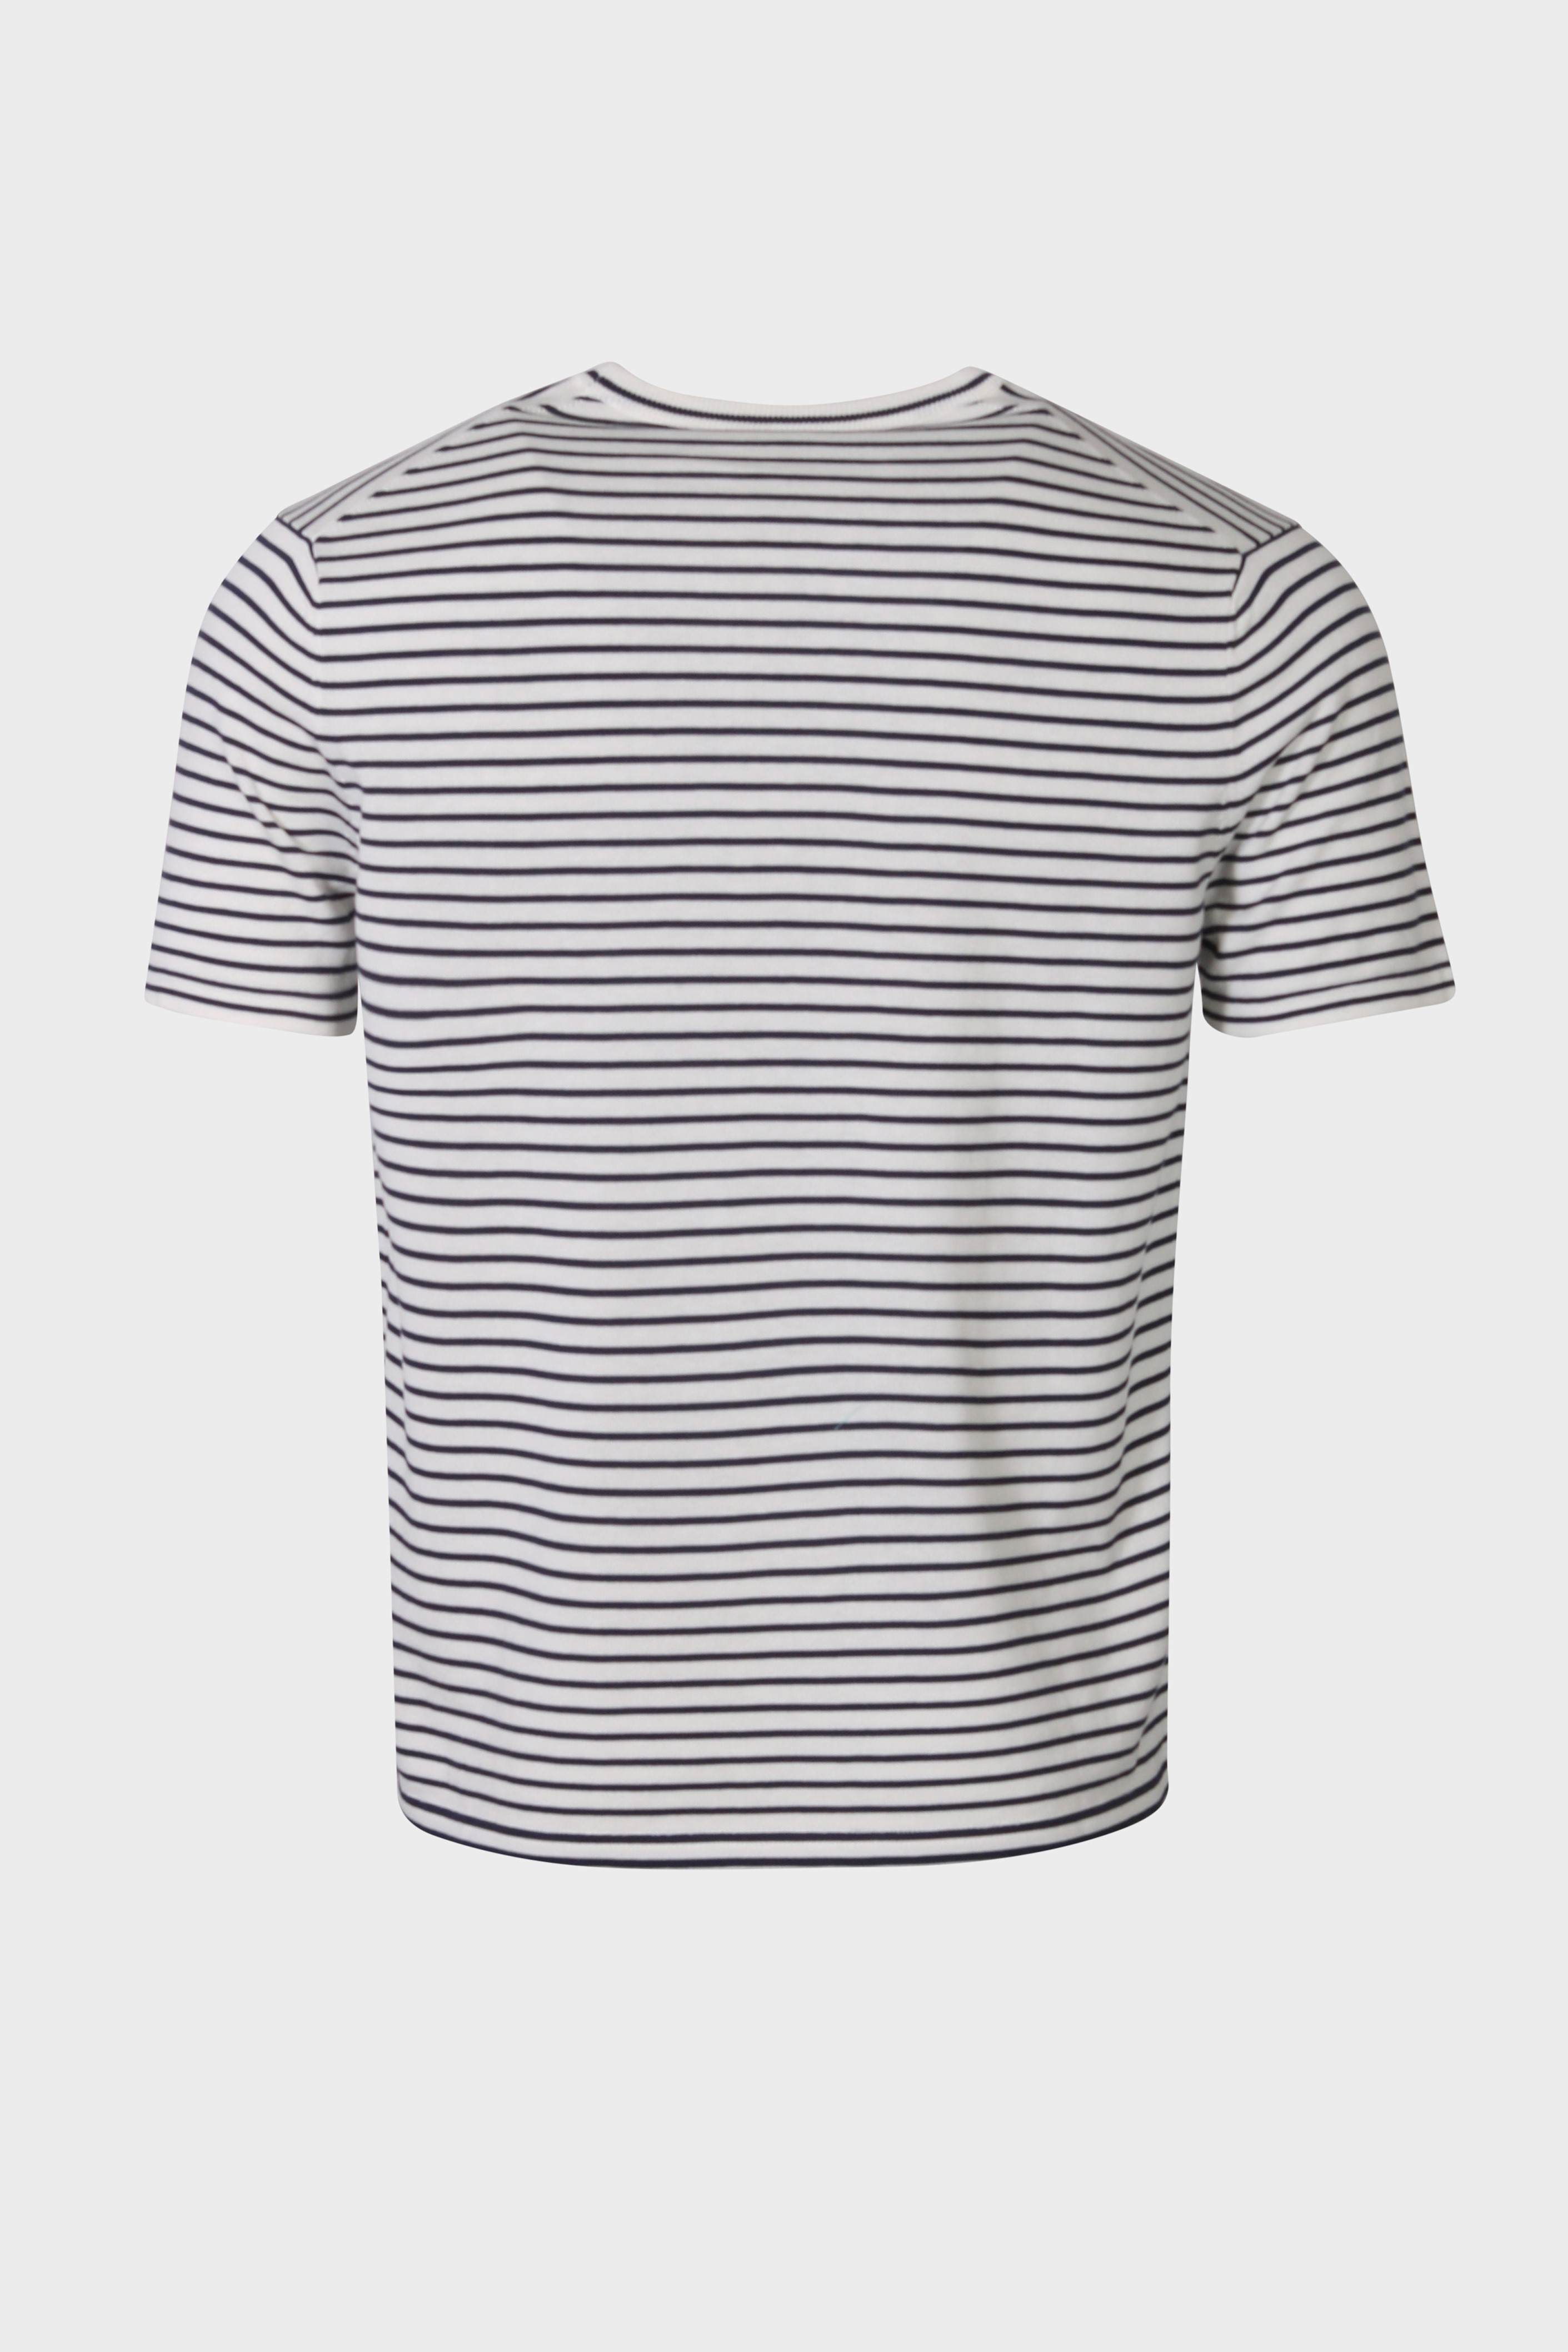 ASPESI Striped Knit T-Shirt in Navy/White 54